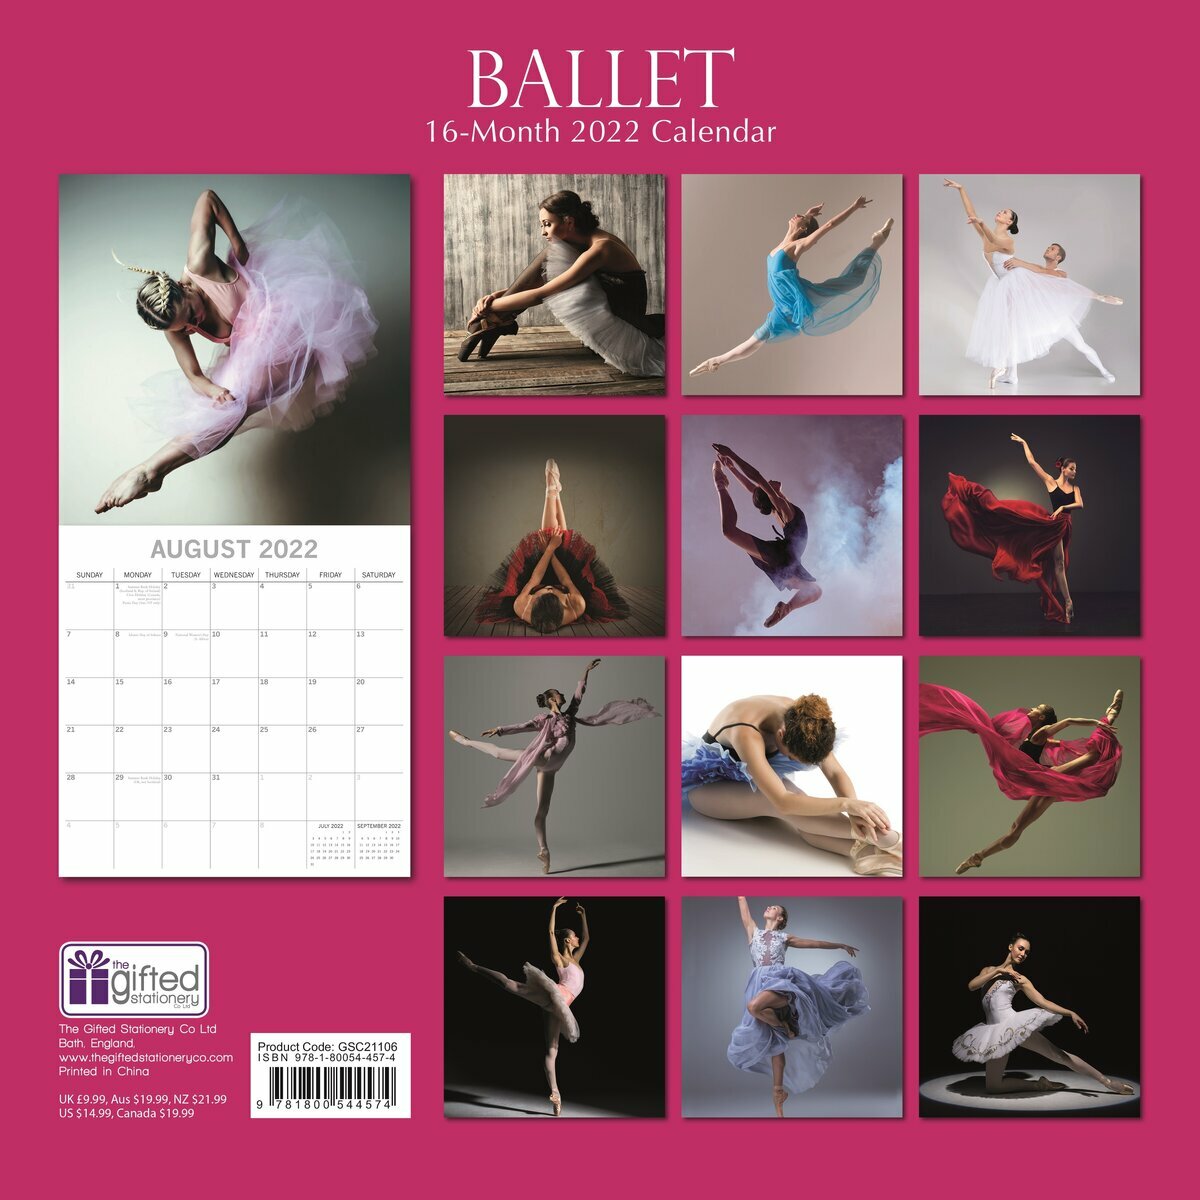 Calendrier 2022 Ballet de danse